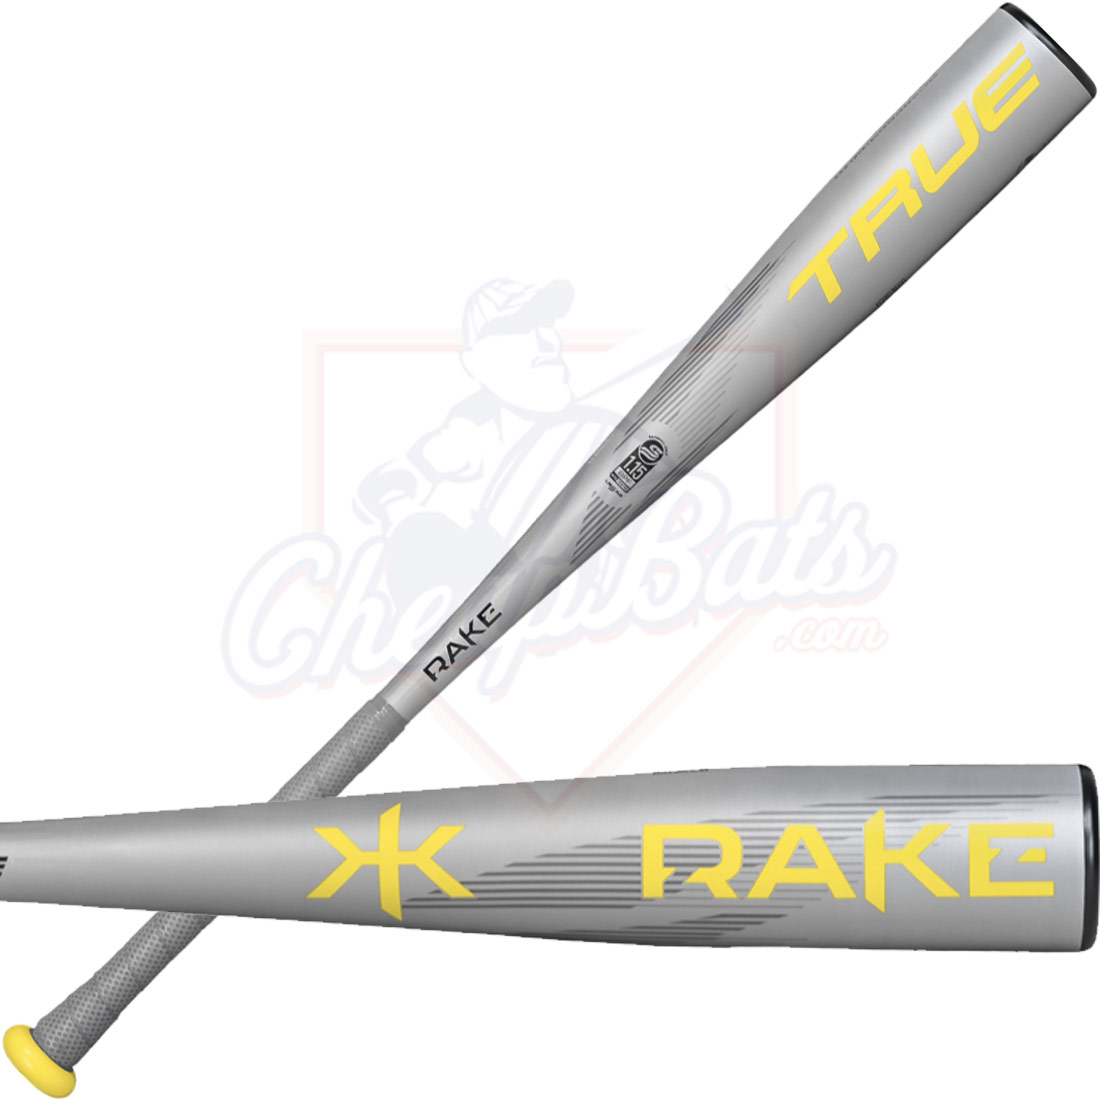 True Temper Rake Youth USSSA Baseball Bat -8oz UT-22-RKE-X-8